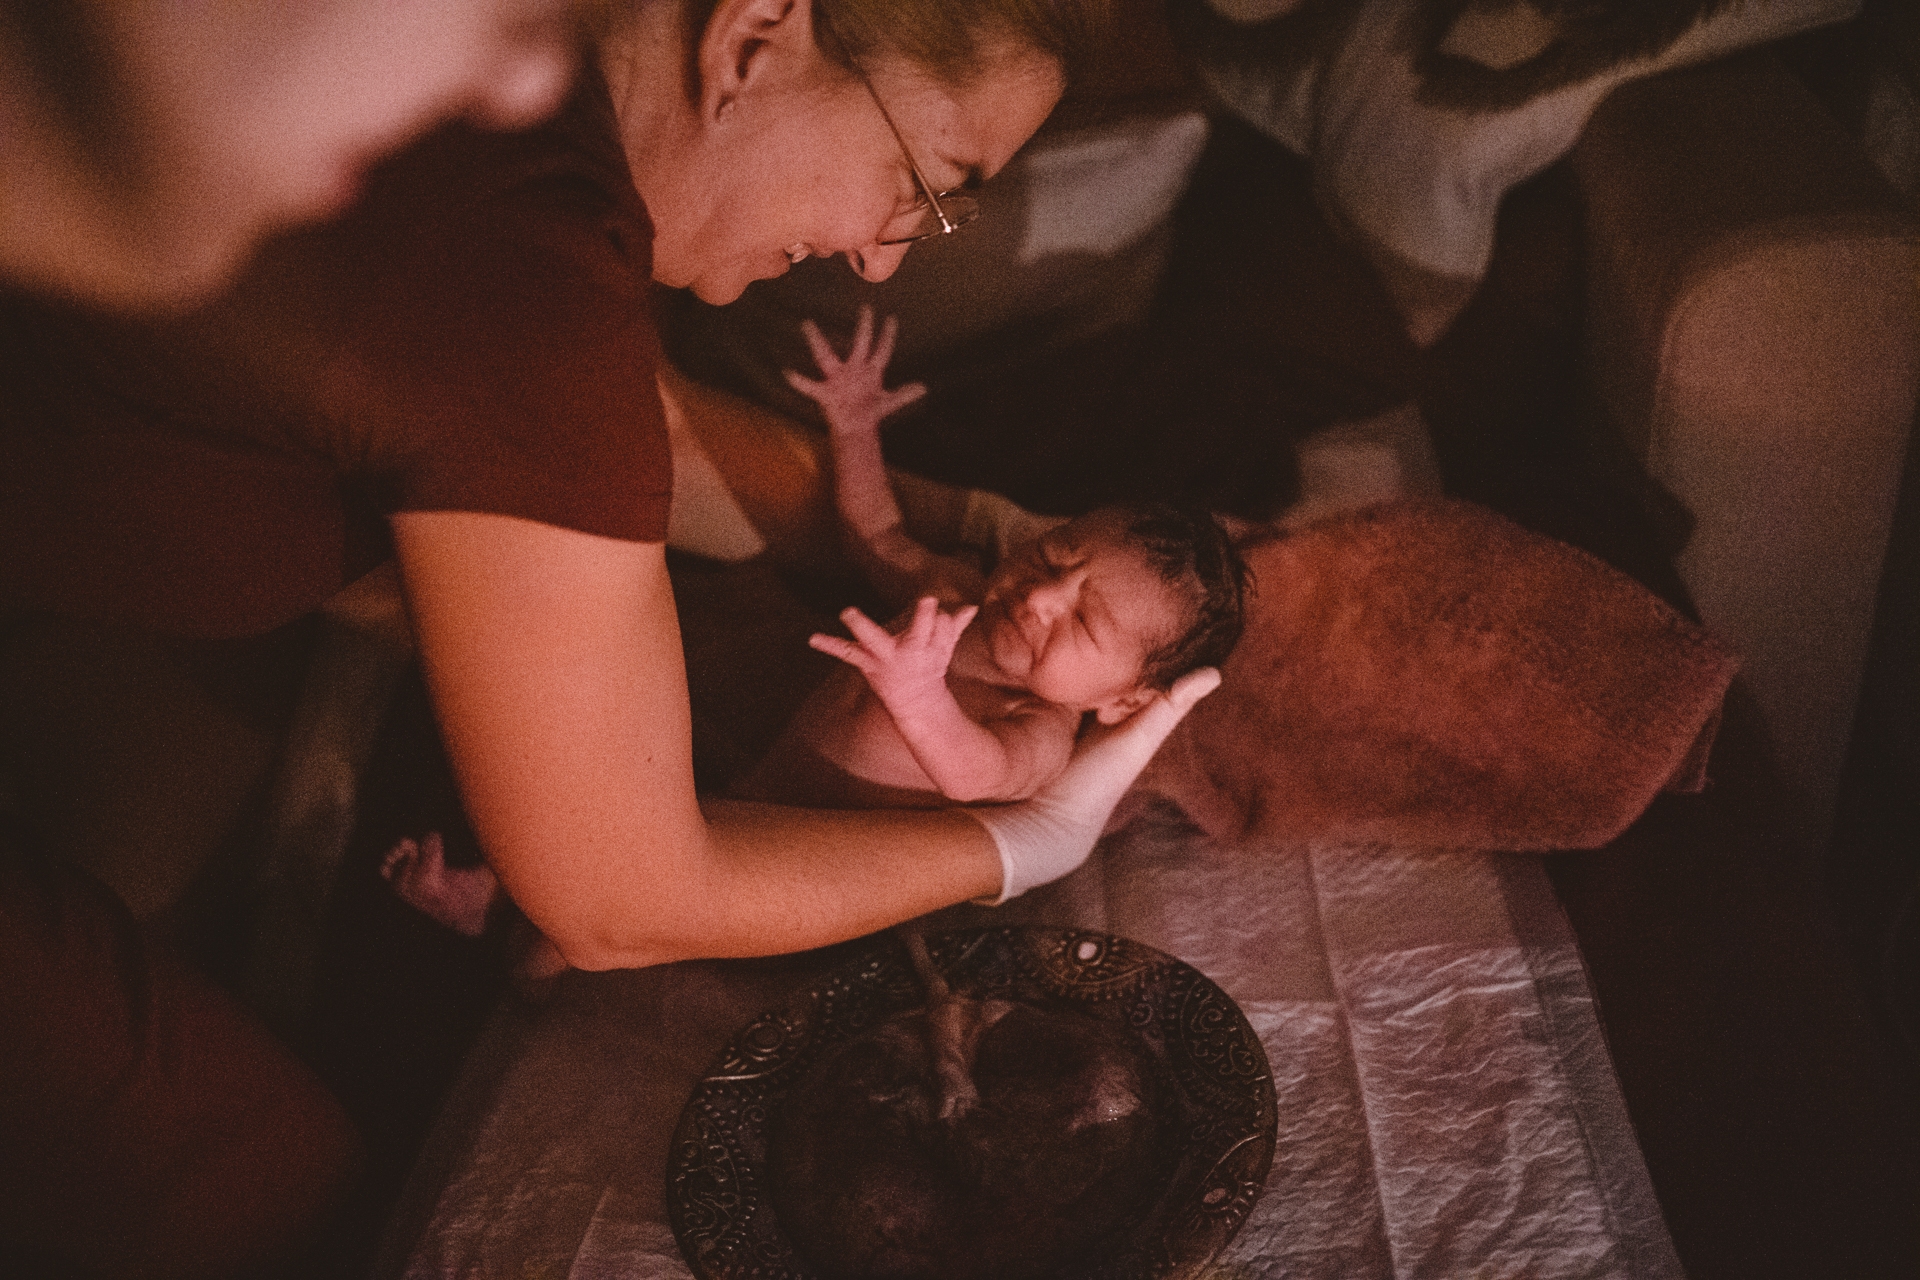 Frischgeboren. Wundervolles neues Leben. Dokumentarische Fotografie. Geburtsfotografie. Plazenta. Hebammenarbeit. Geburtsfotos.